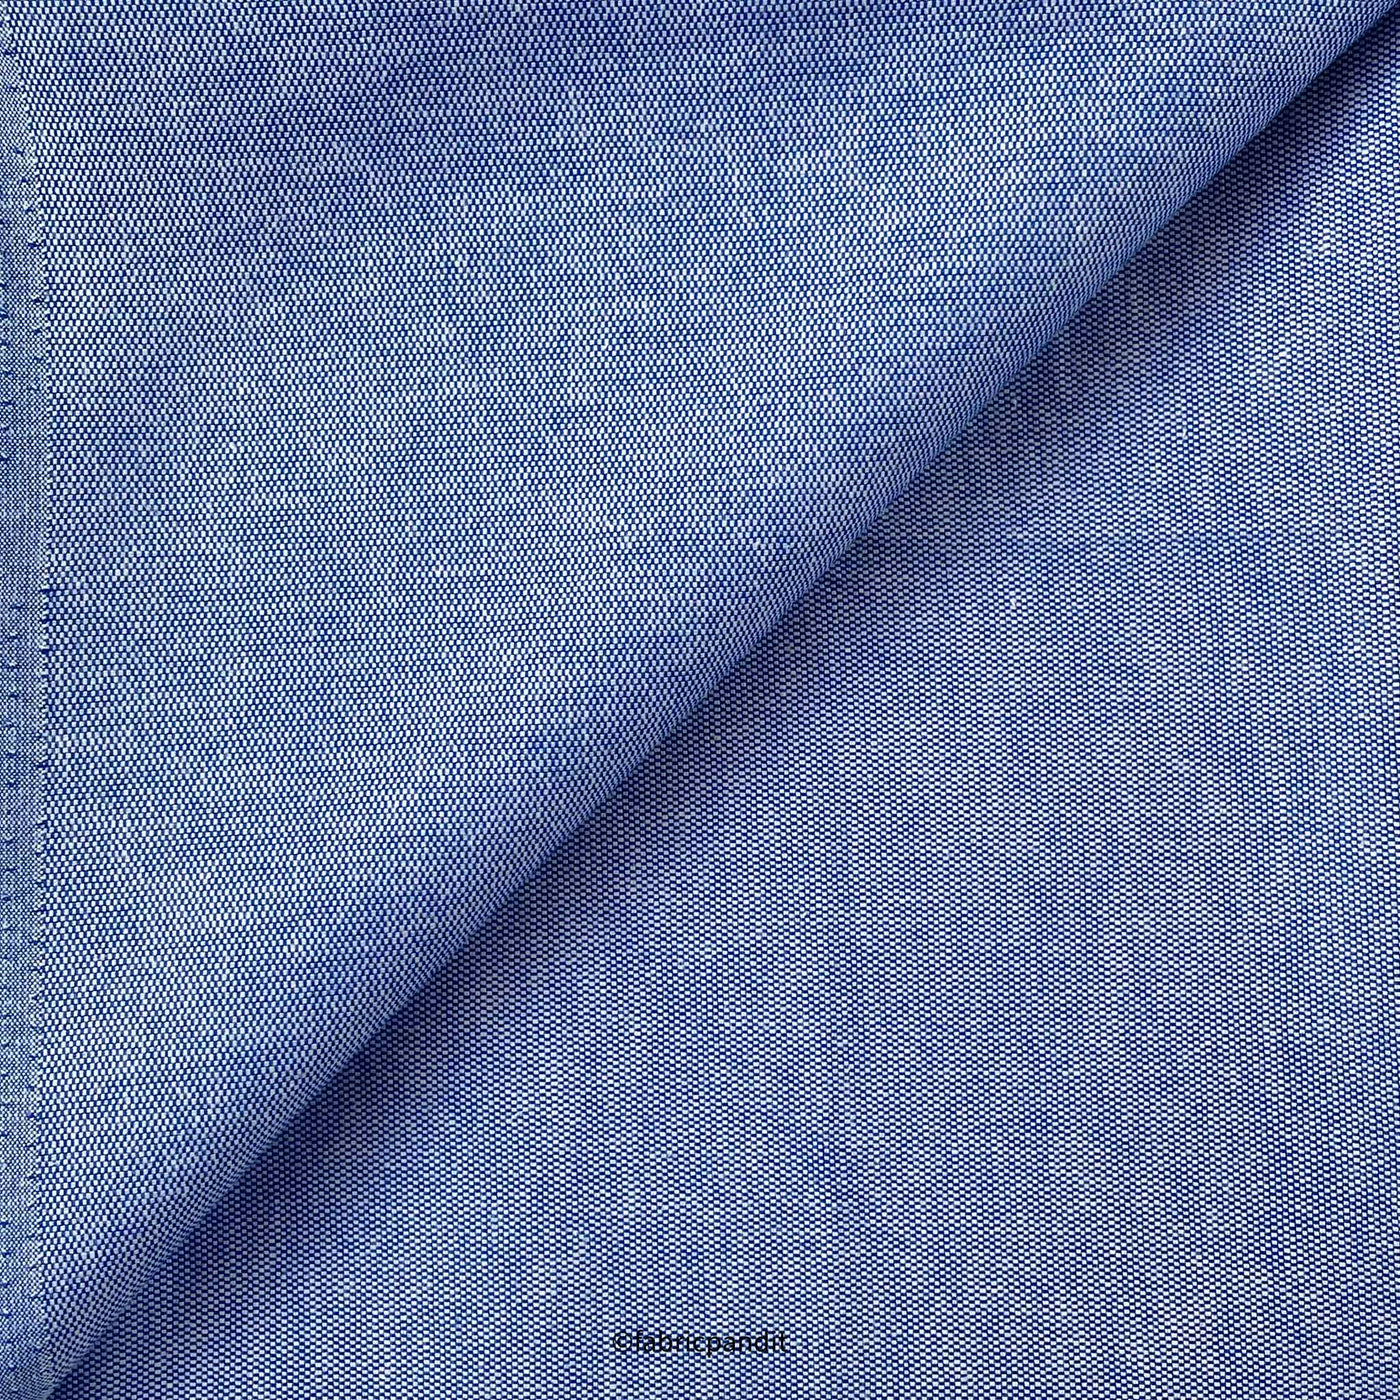 Fabric Pandit Cut Piece (CUT PIECE) Metalic Blue Premium Oxford Cotton Fabric (Width 58 Inches)